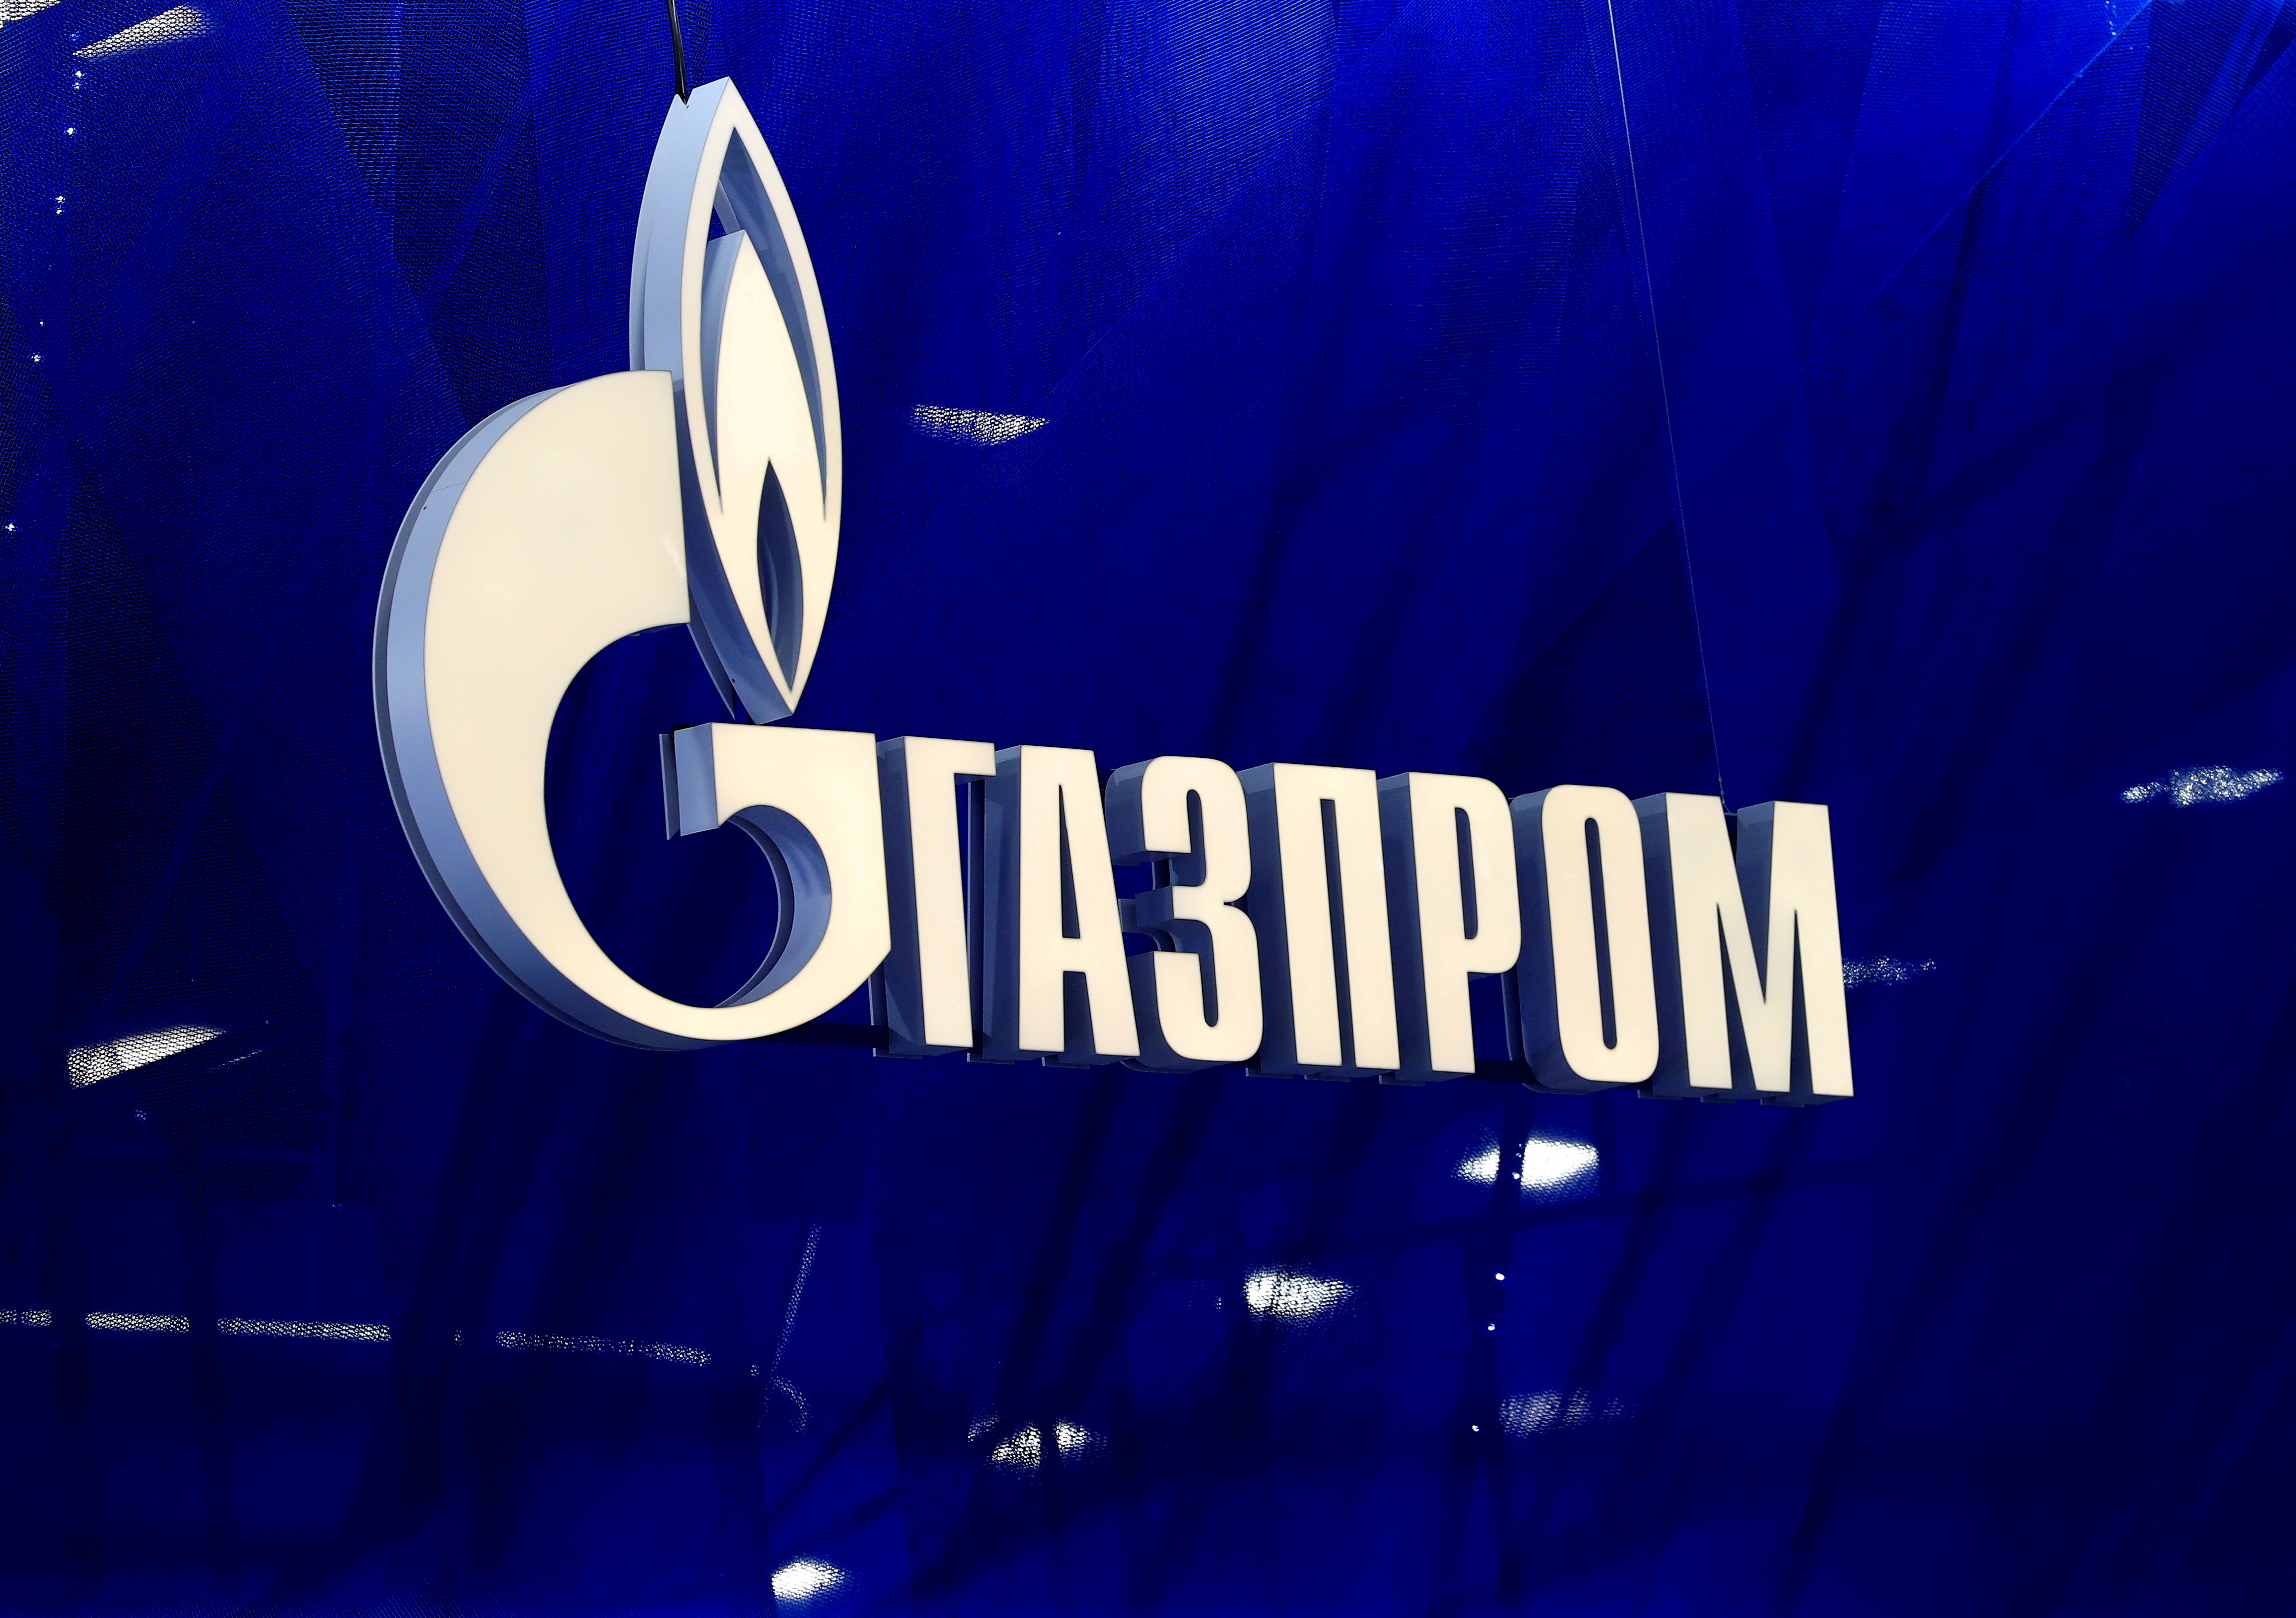 The logo of Gazprom company is seen at the St. Petersburg International Economic Forum (SPIEF) in Saint Petersburg, Russia, June 2, 2021. REUTERS/Evgenia Novozhenina